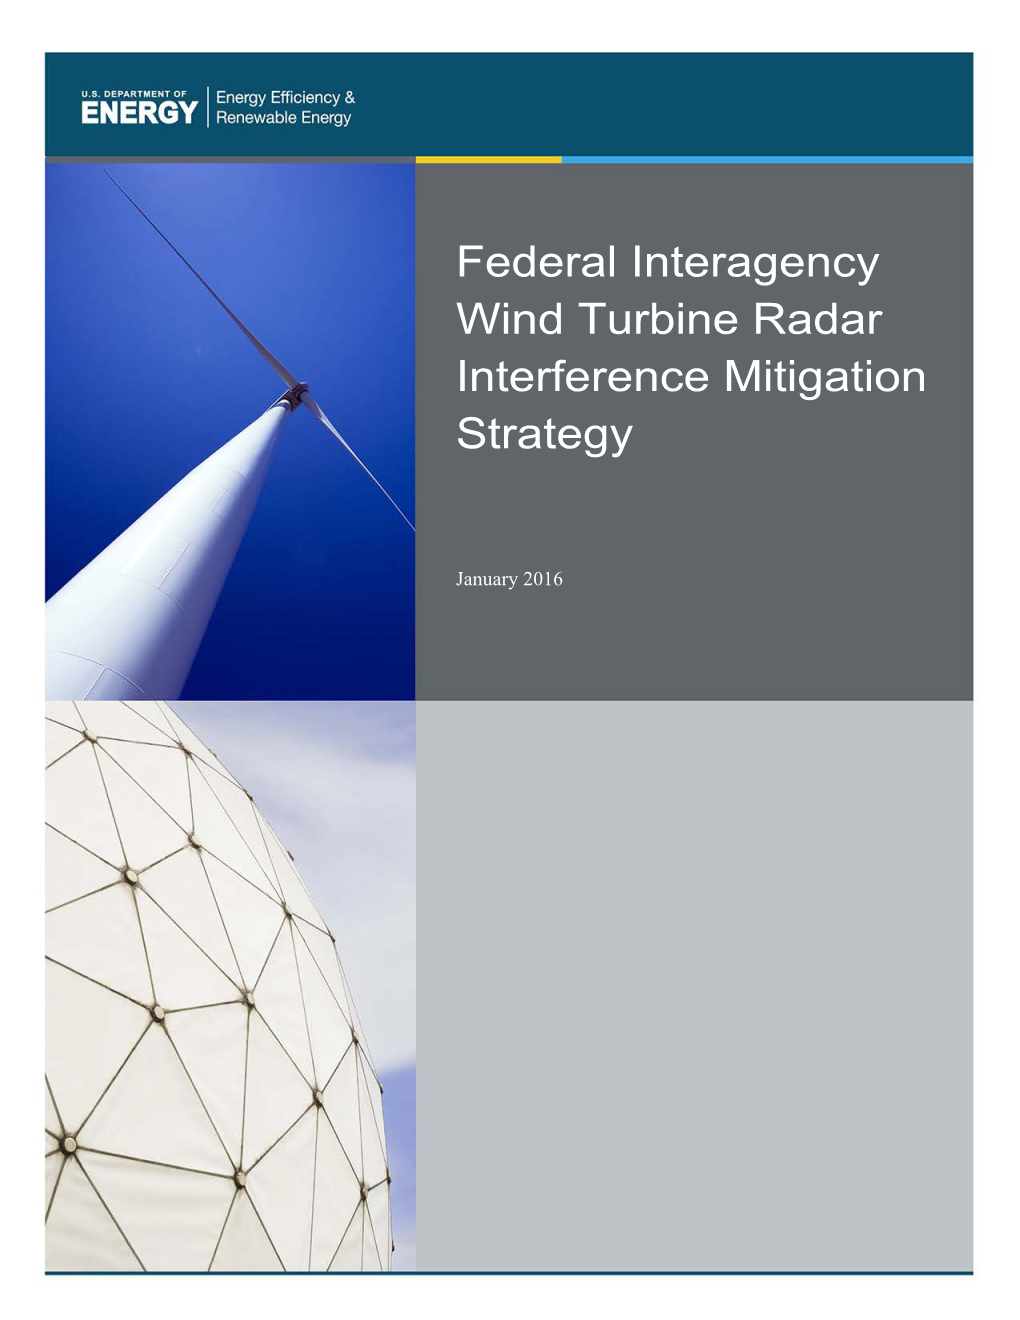 Federal Interagency Wind Turbine Radar Interference Mitigation Strategy